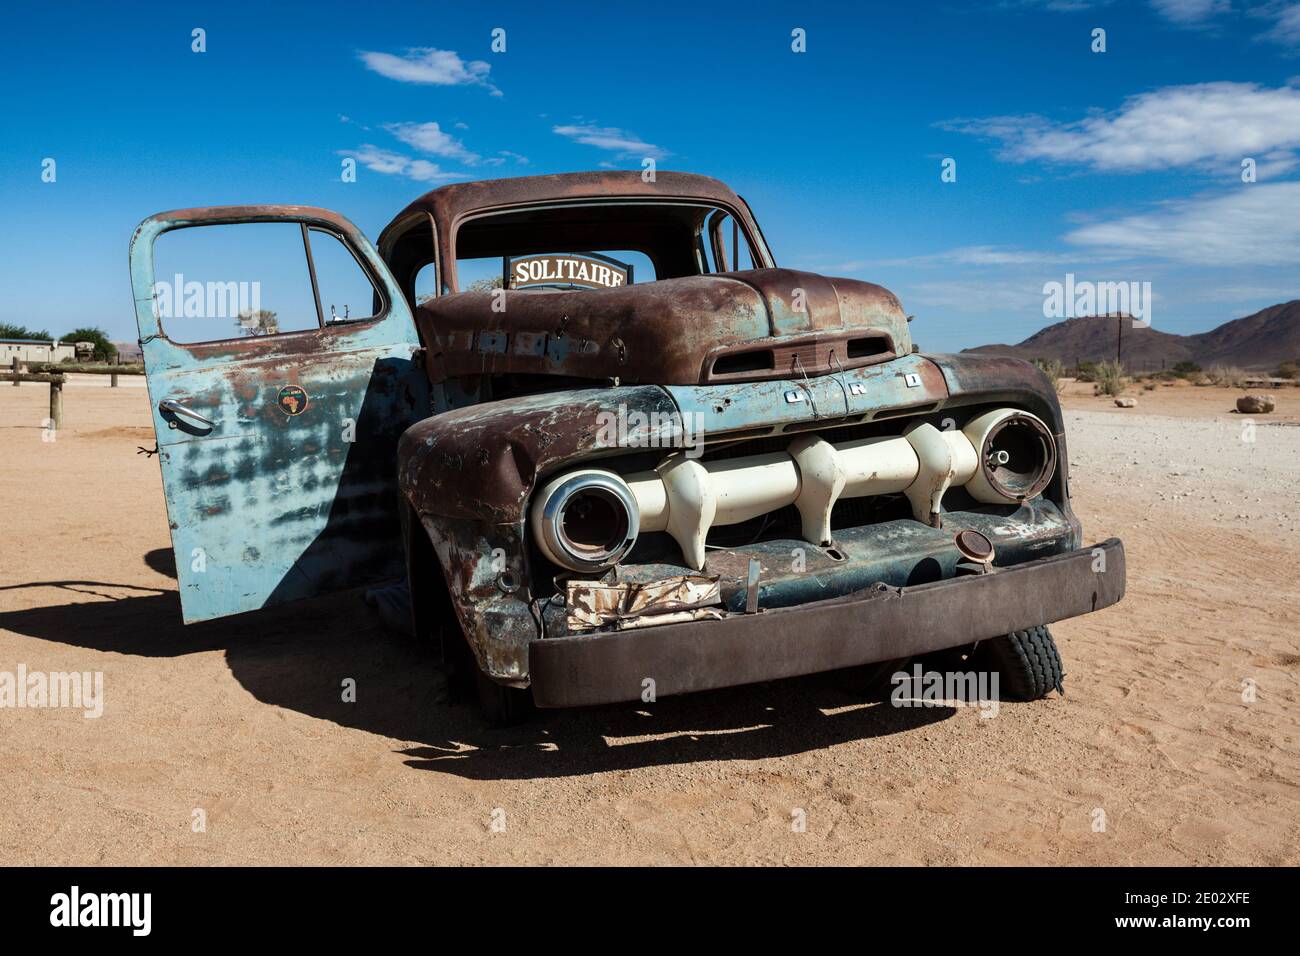 Car Wreck at Solitaire, Namib Naukluft Park, Namibia Stock Photo